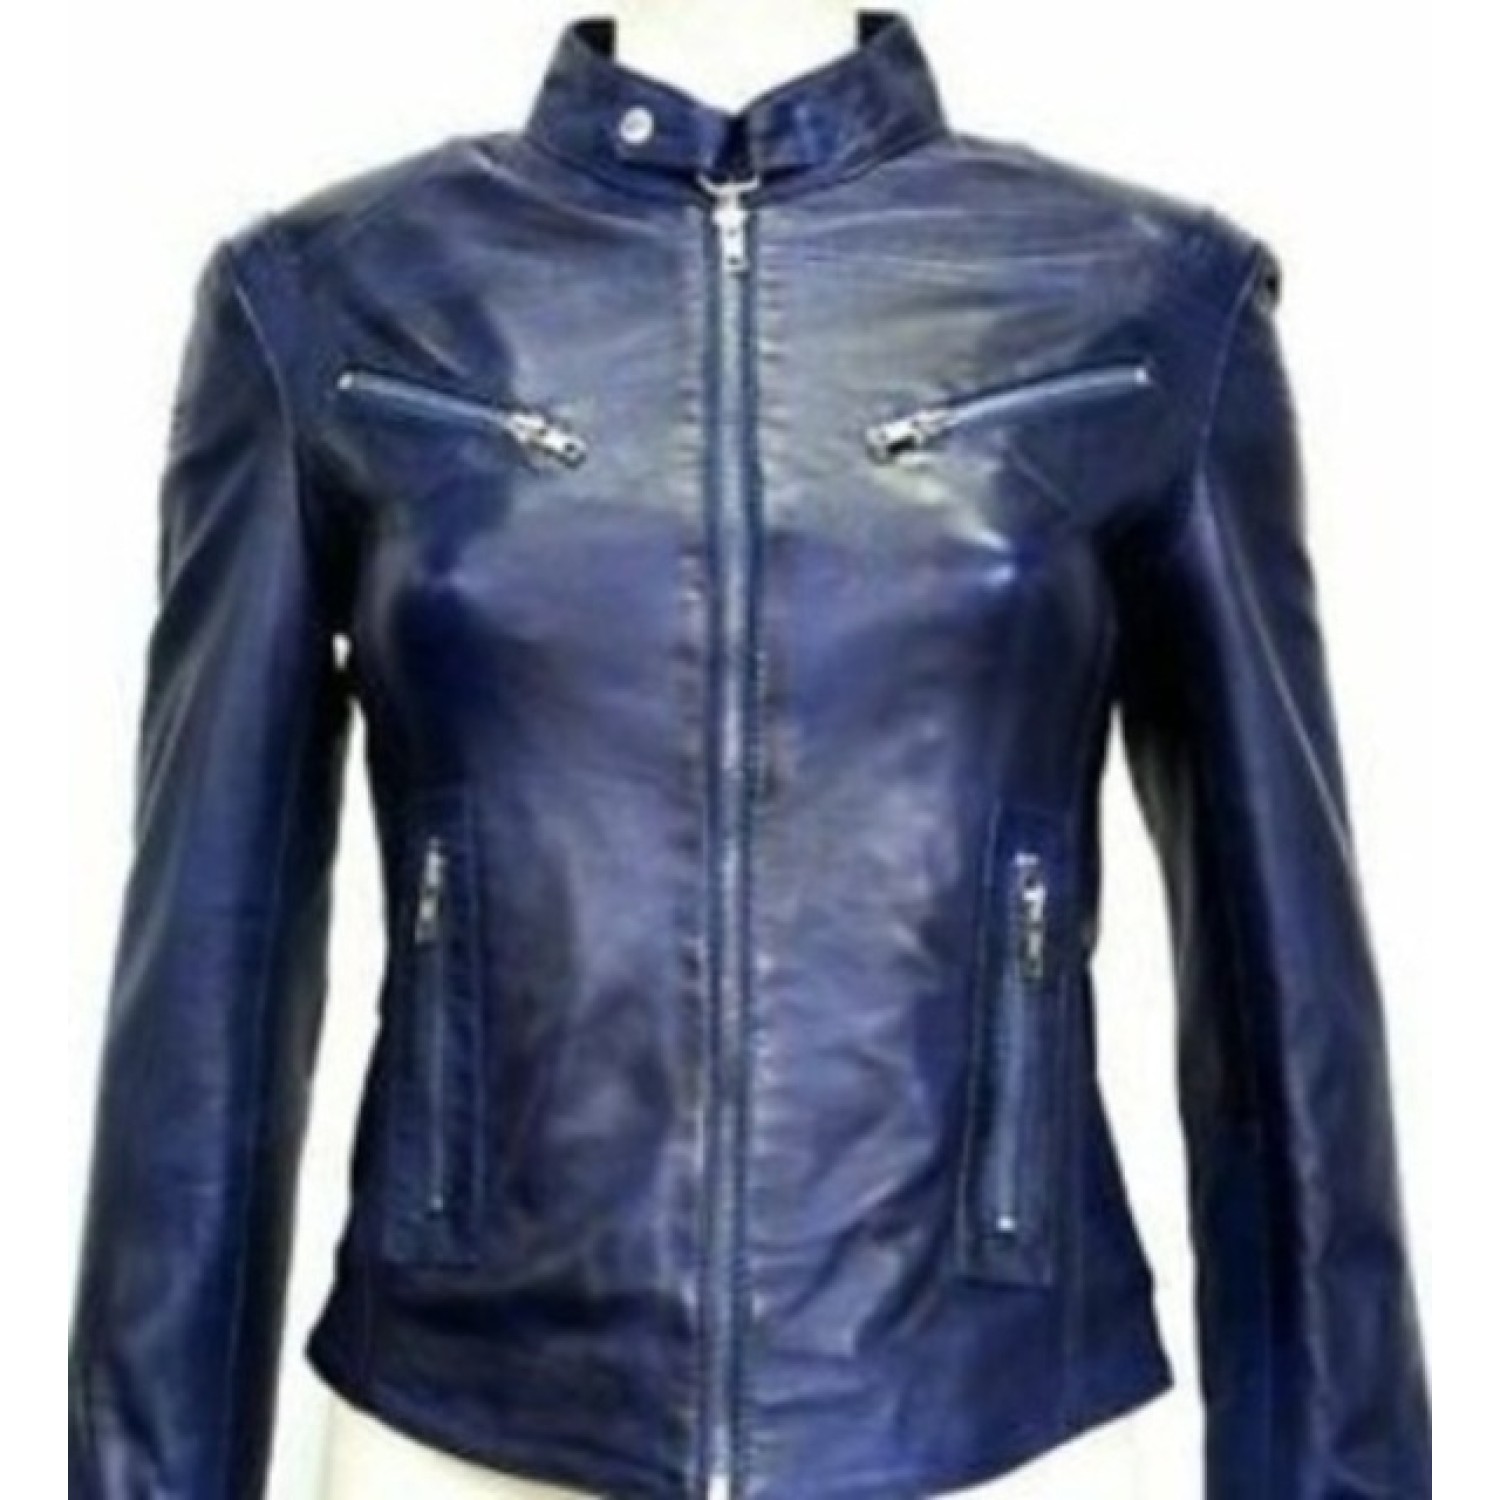 Hot Selling Women Genuine Sheepskin Real Leather Jacket Biker Classic Blue Jacket